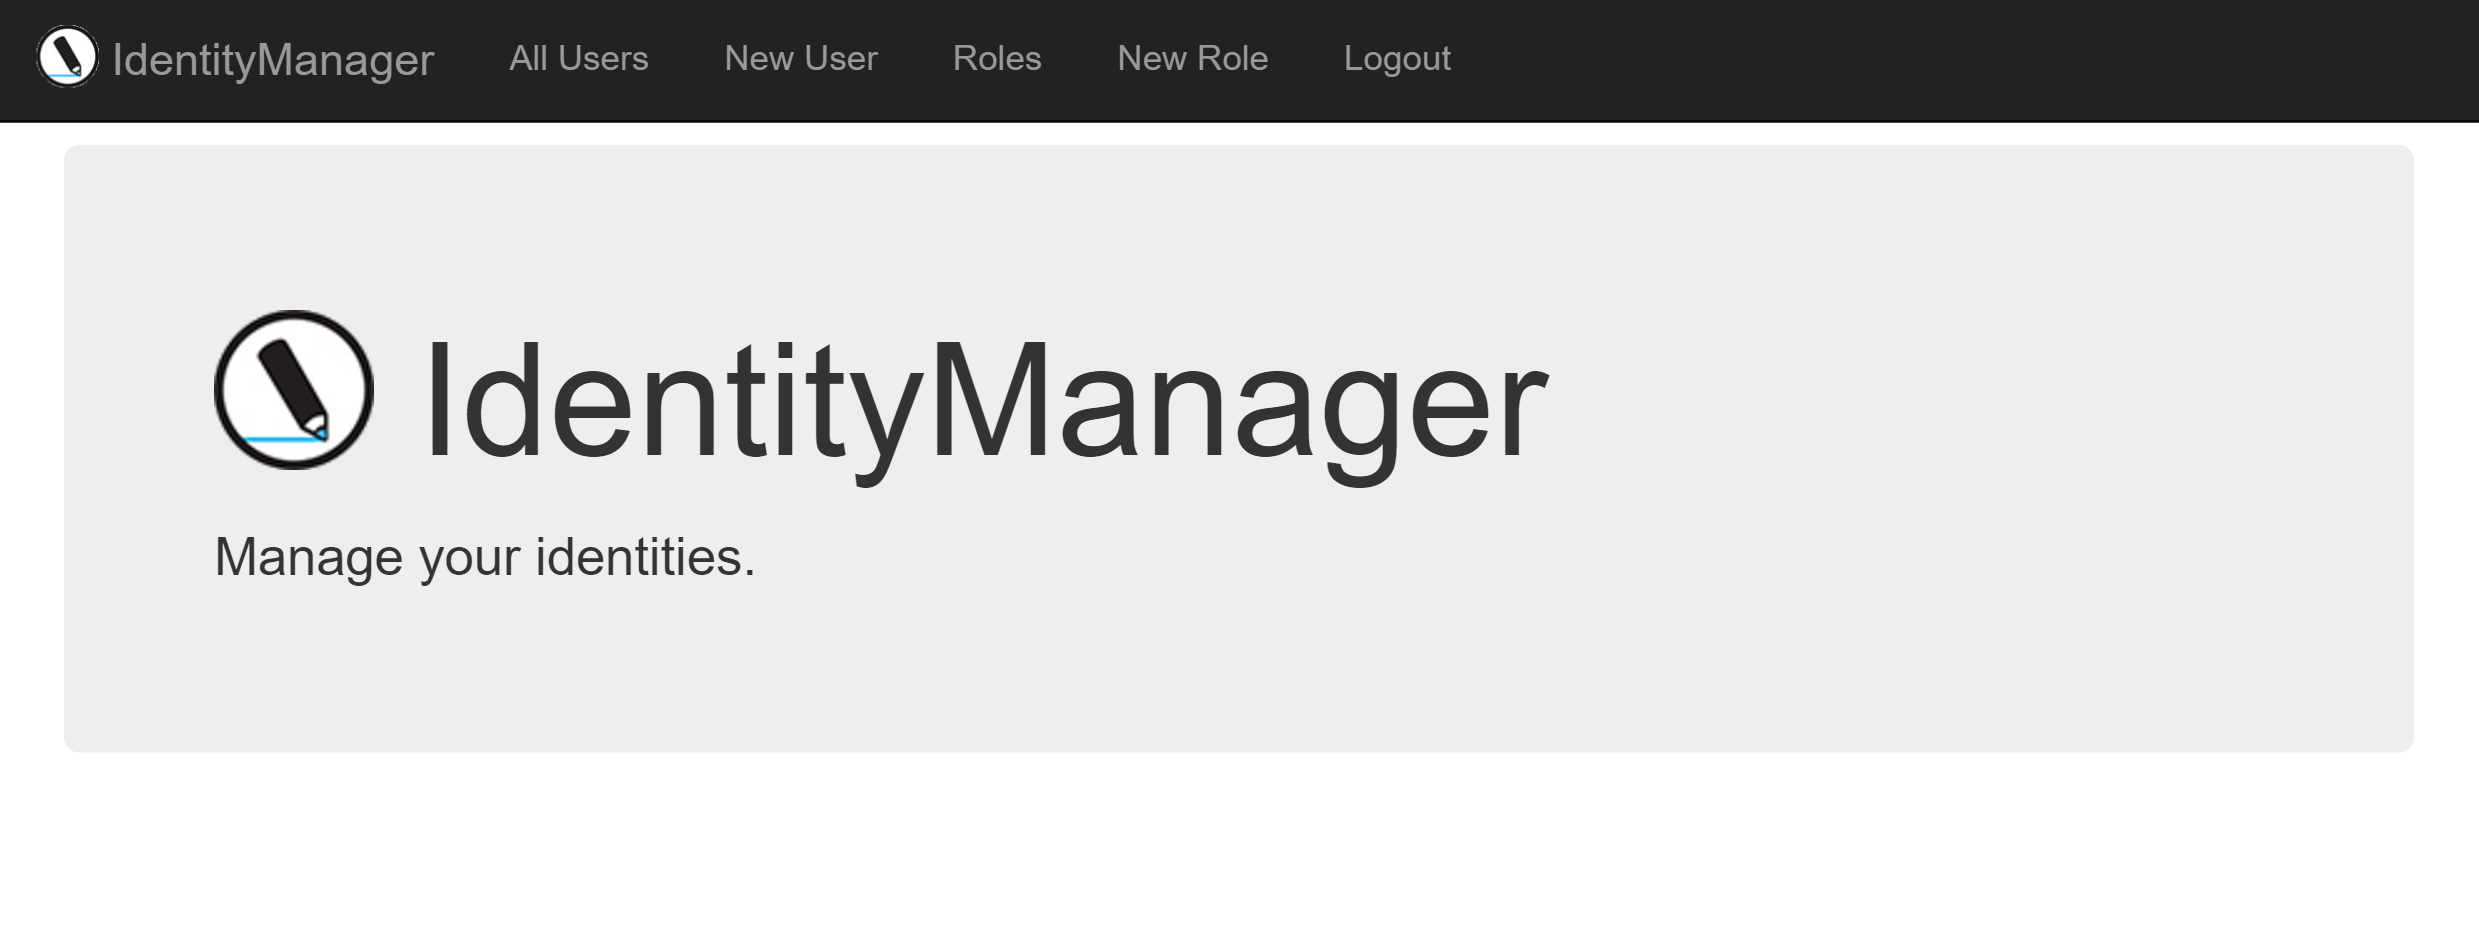 Identity Manager Splash Screen